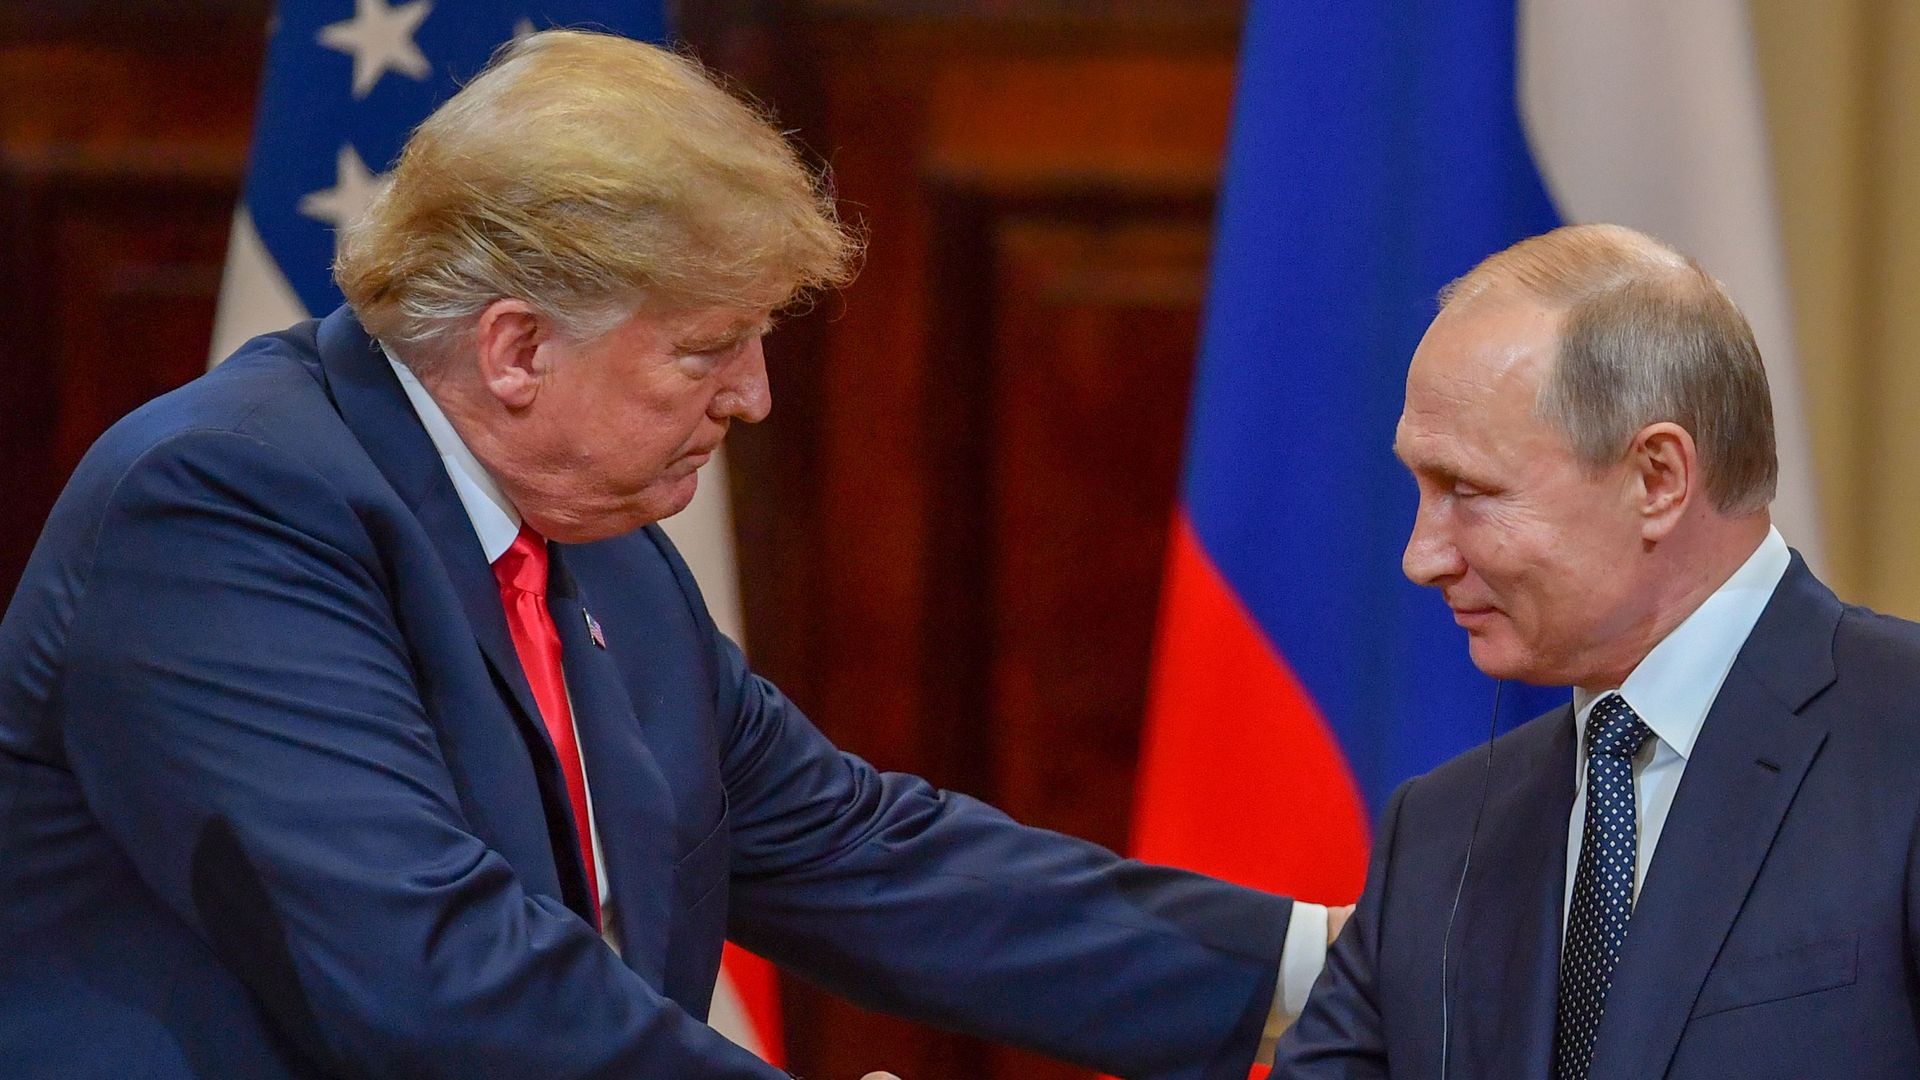 Trump shaking hands with Putin